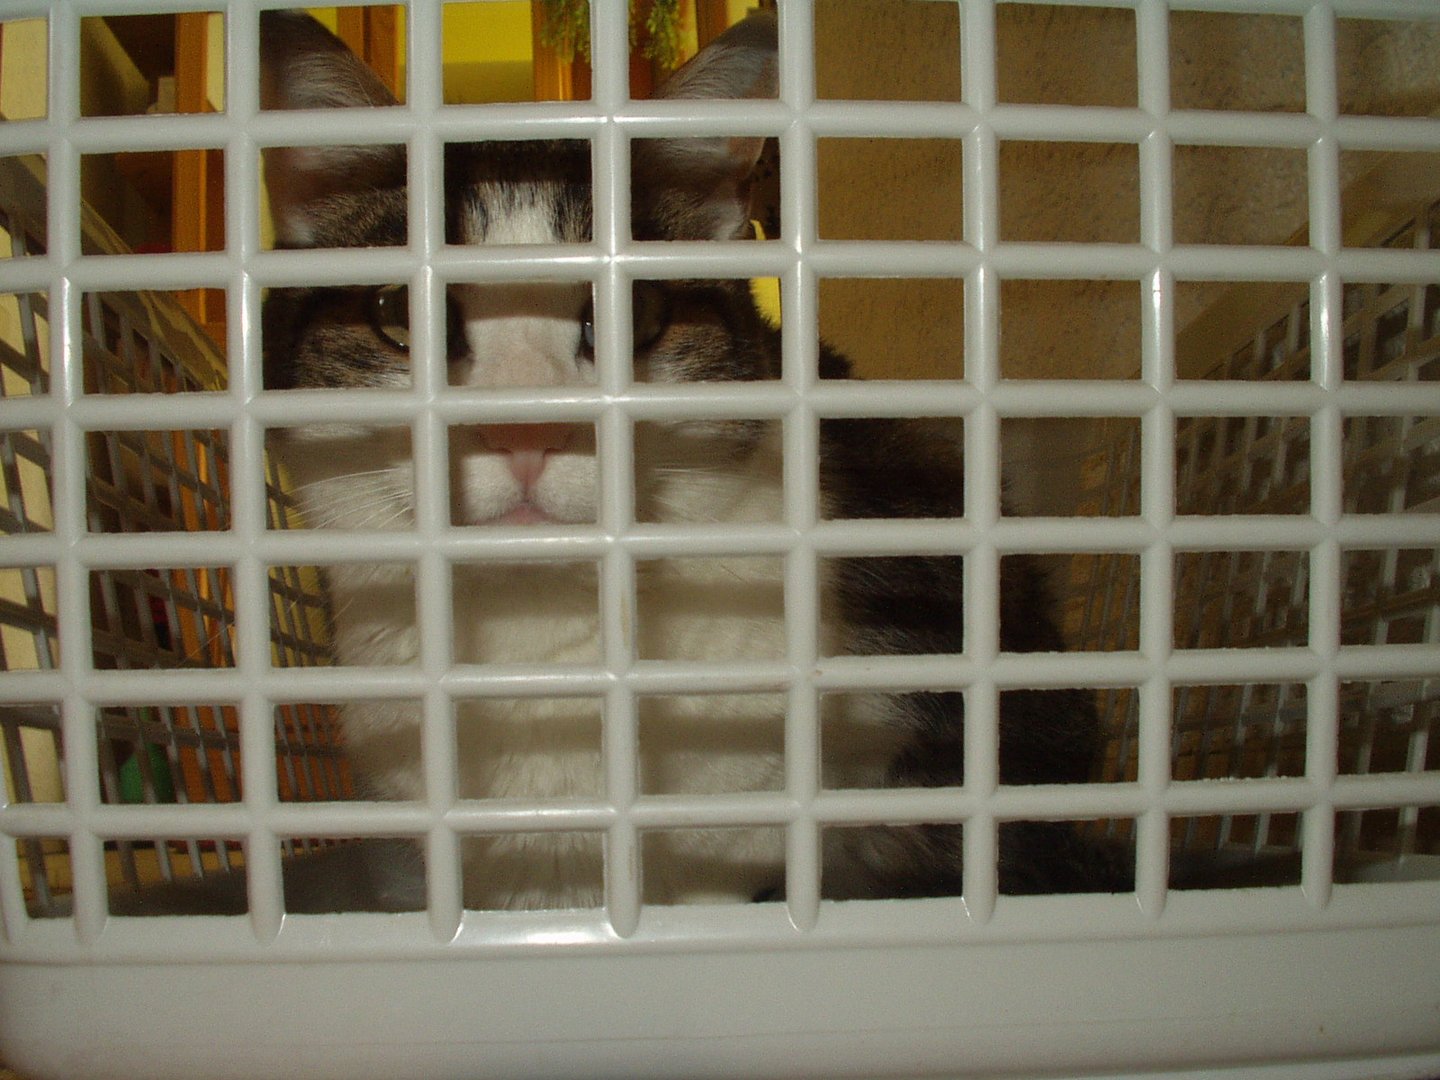 Katze hinter Gittern?